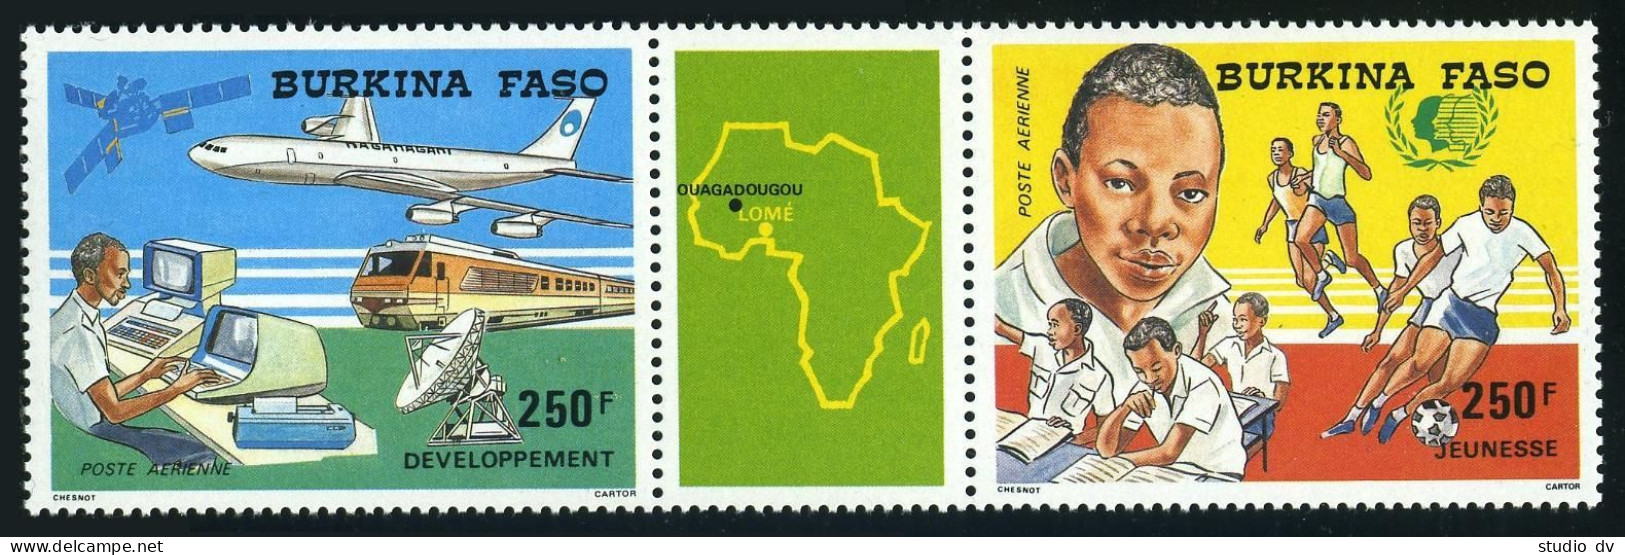 Burkina Faso C311-C312a,MNH. PHILEXAFRICA-1995.Youth - Soccer,Communications. - Burkina Faso (1984-...)